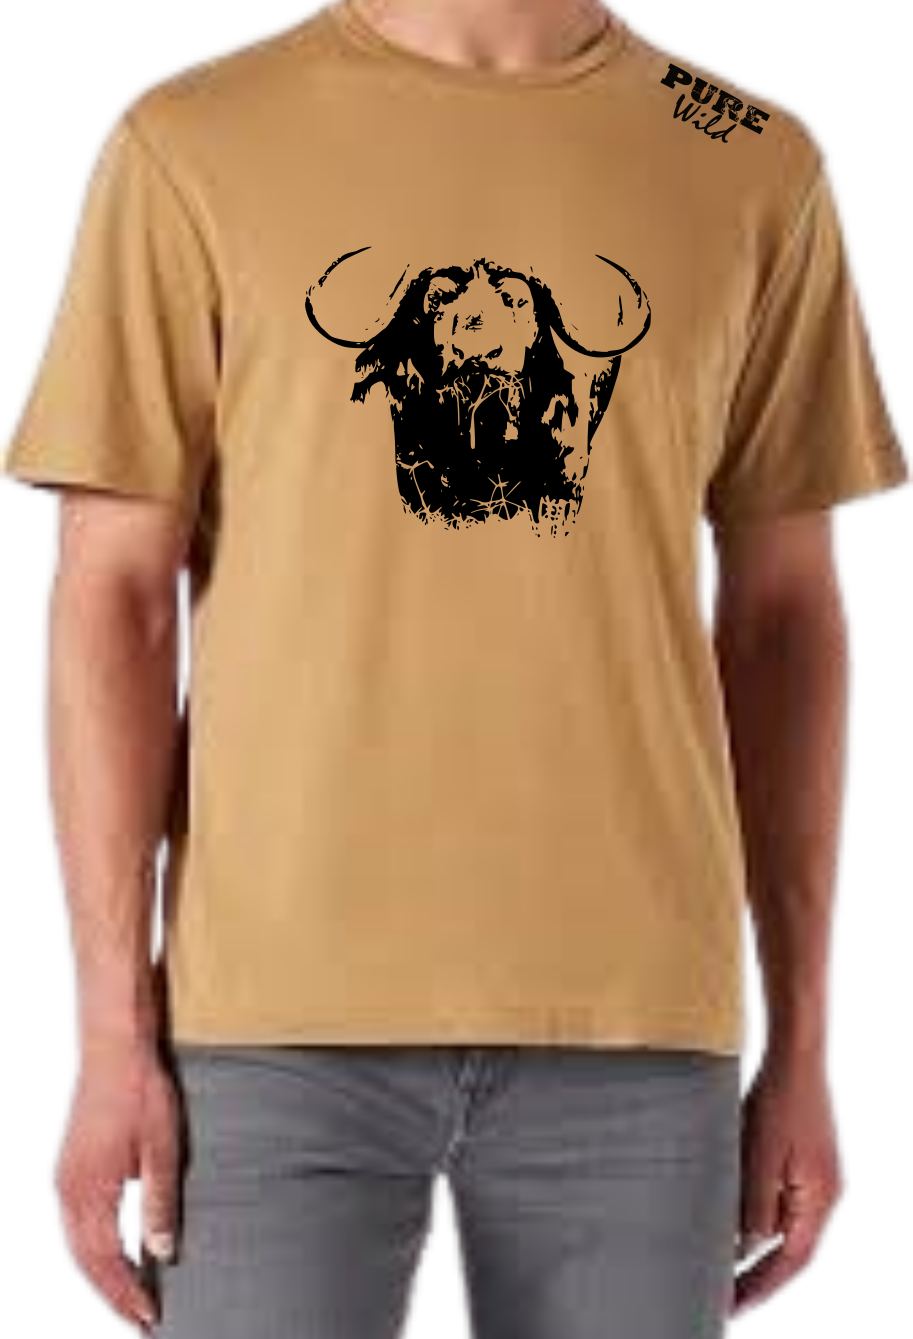 The Buffalo Head T-Shirt For A Real Man